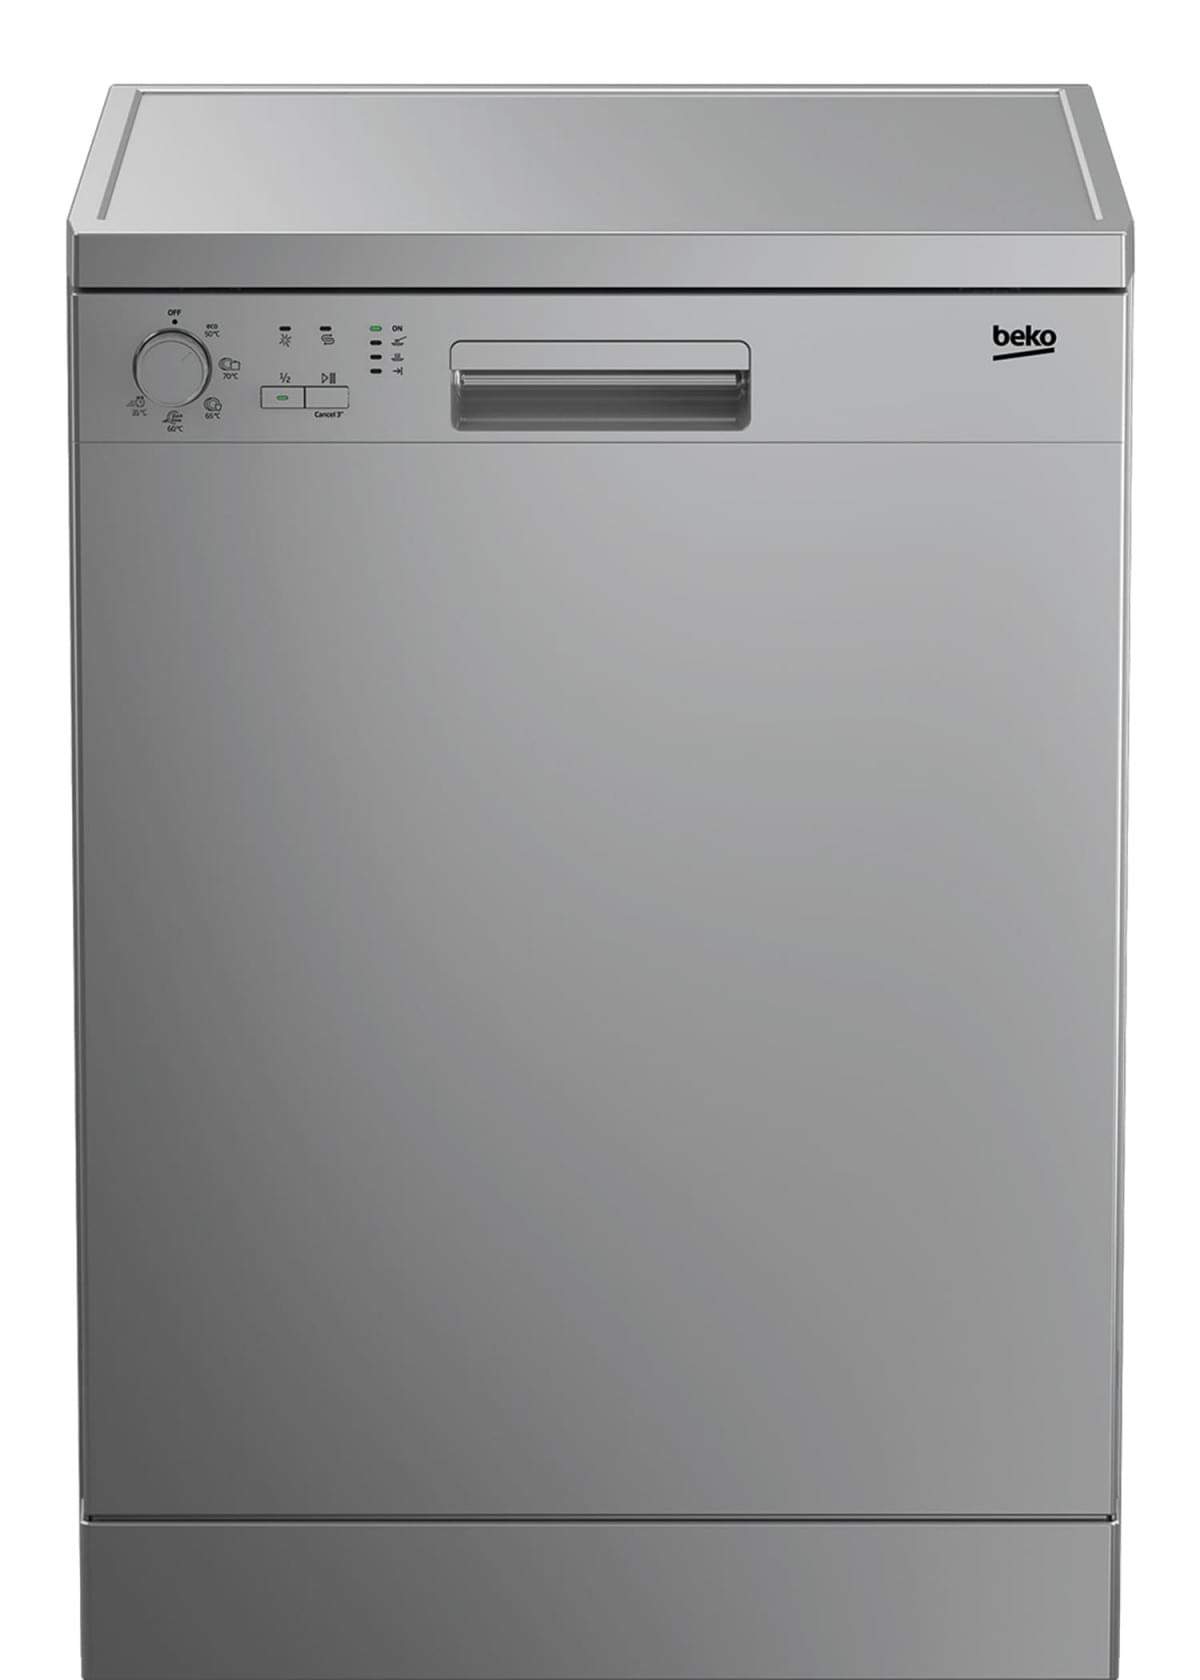 BEKO DFN05310S   Машина посудомоечная - уменьшенная 6